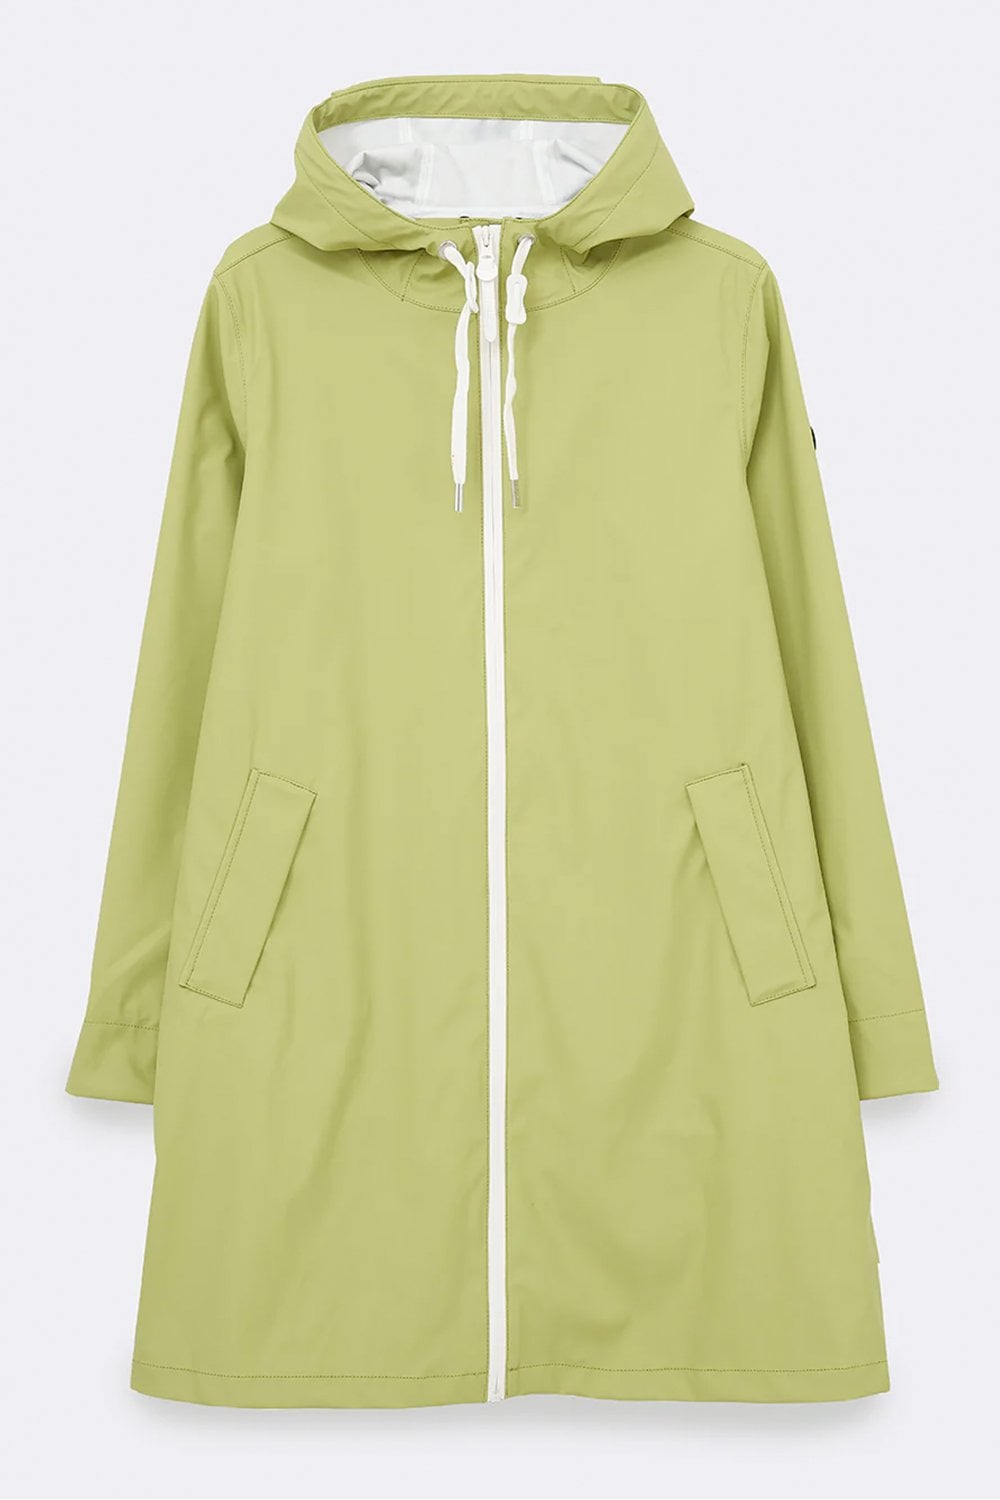 TANTA Rainwear Nuovola Jacket In Fern